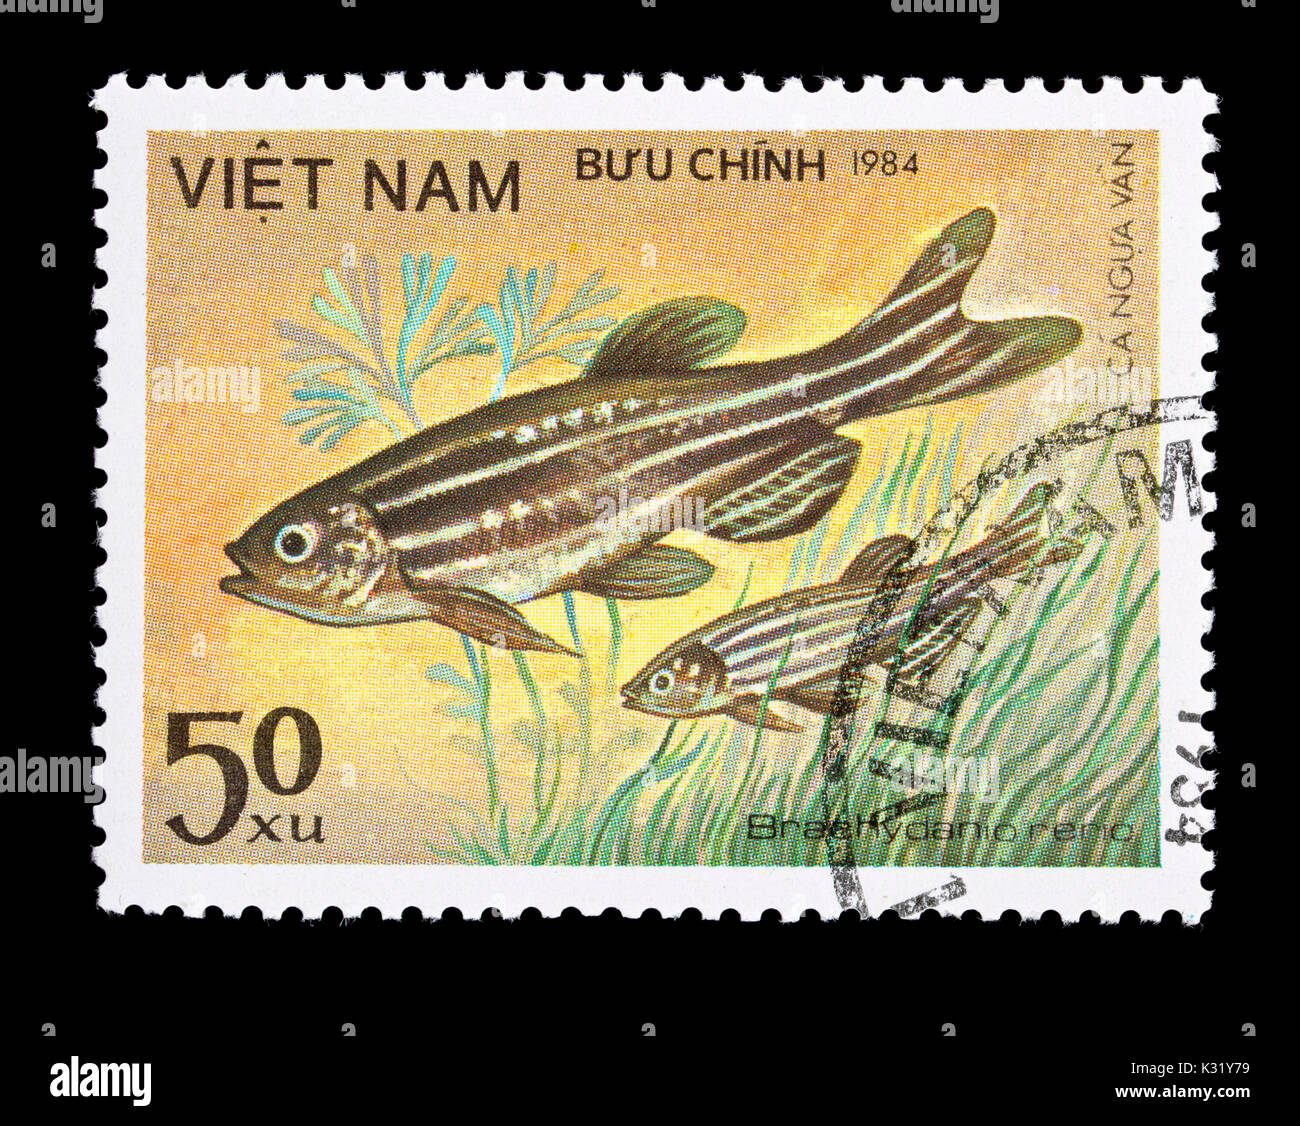 Postage stamp from Vietnam depicting a zebrafish (Danio rerio) Stock Photo